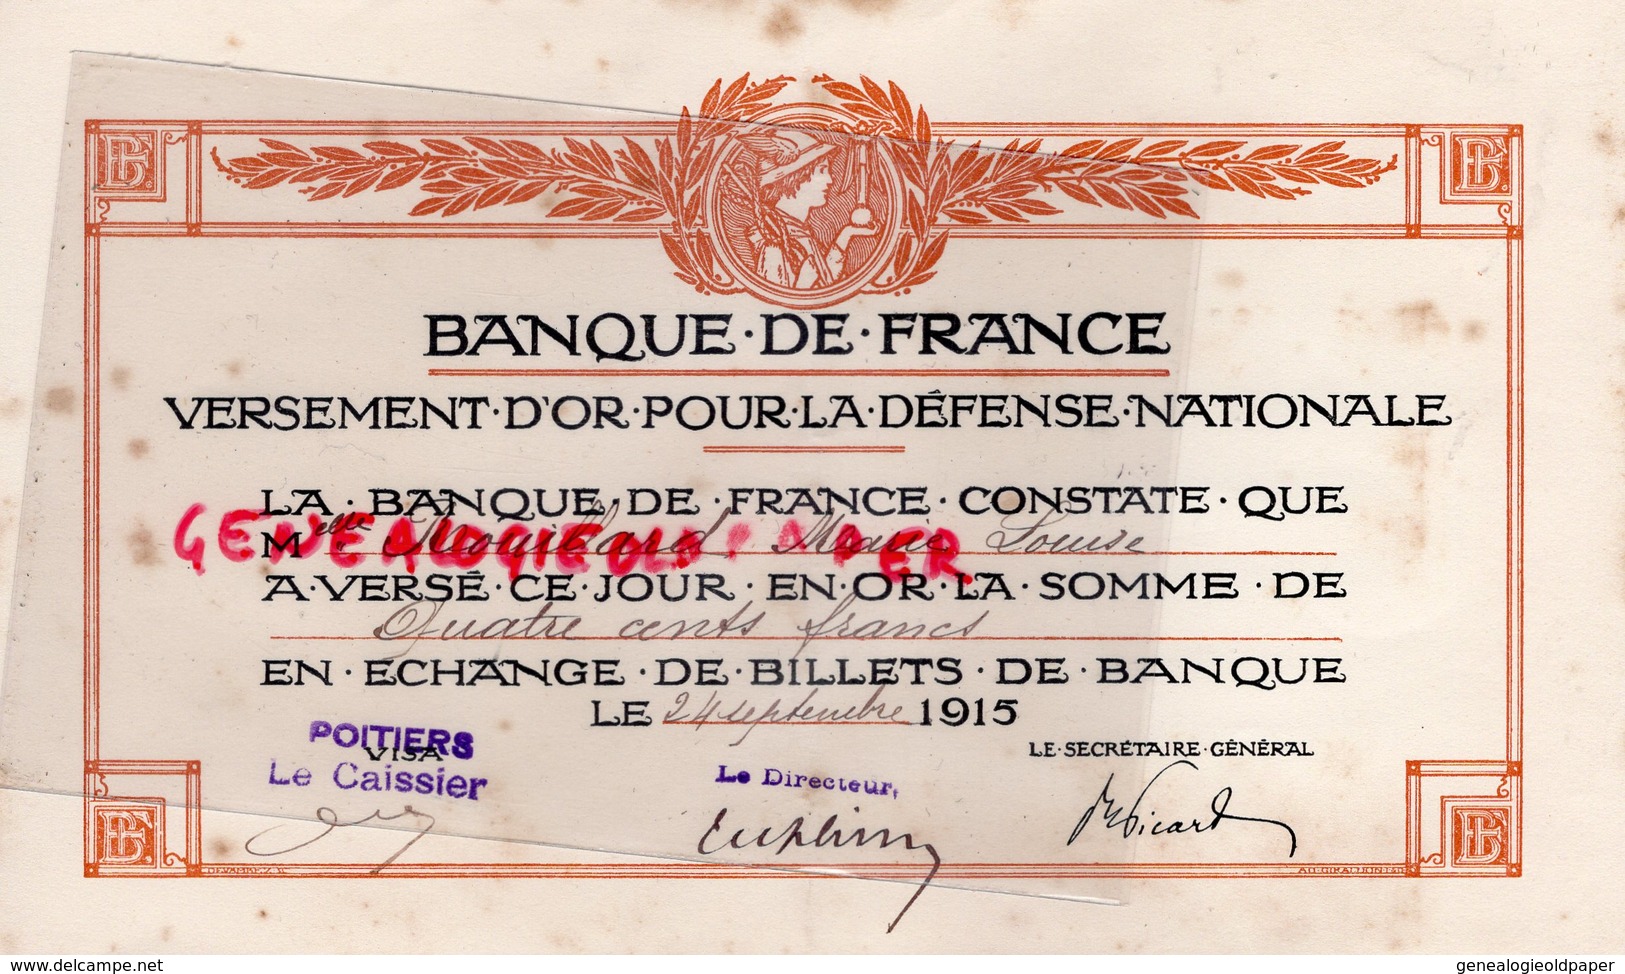 86- POITIERS-- VERSEMENT OR DEFENSE NATIONALE -BANQUE DE FRANCE- 400 CENTS FRANCS- 1915- MARIE LOUISE ROUILLARD - Bank En Verzekering